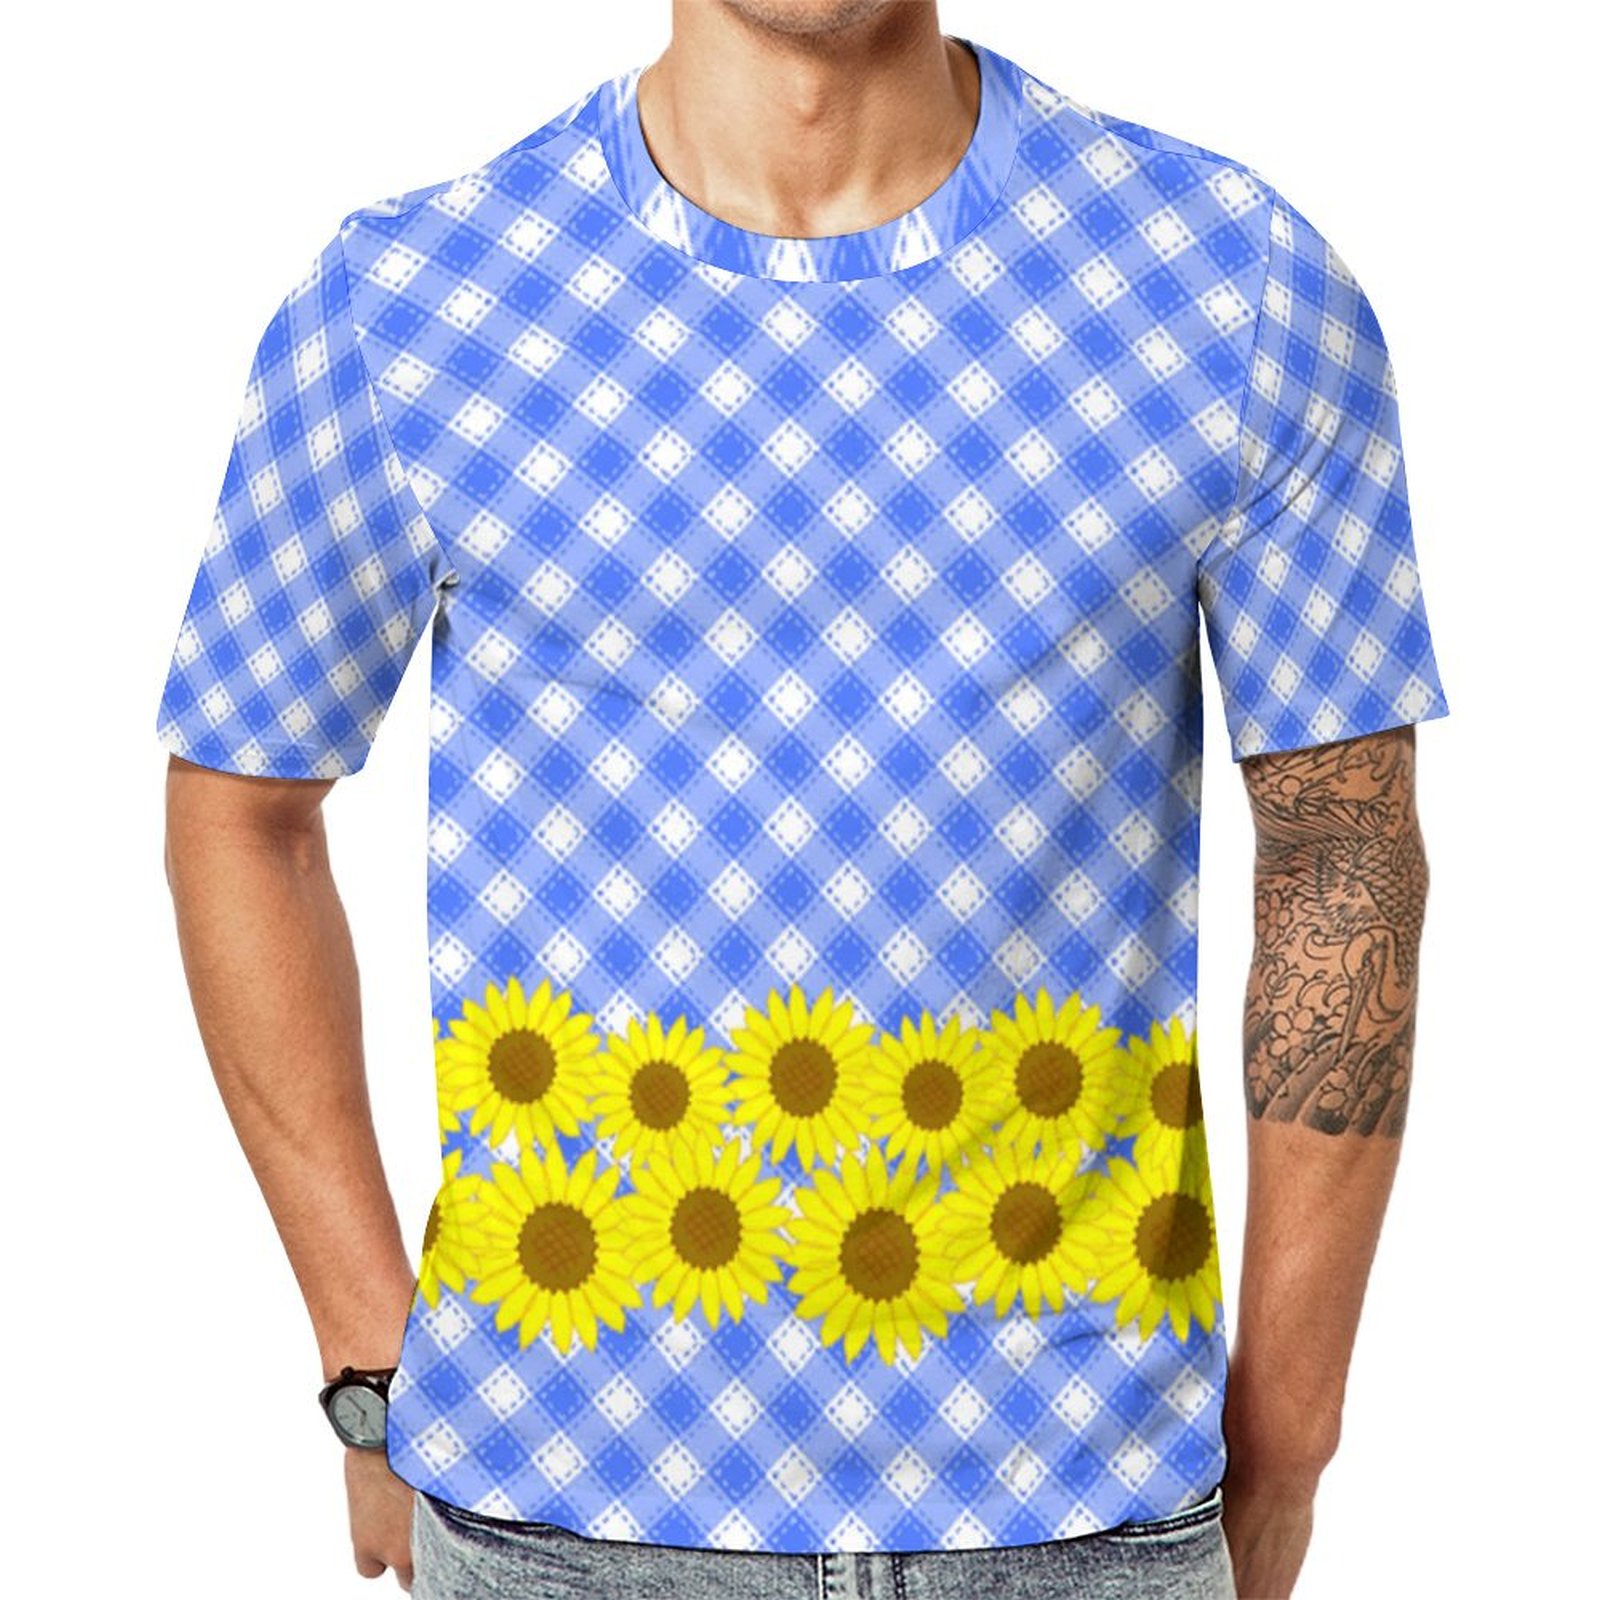 Sunflower Check Blue Beach Sandals Short Sleeve Print Unisex Tshirt Summer Casual Tees for Men and Women Coolcoshirts